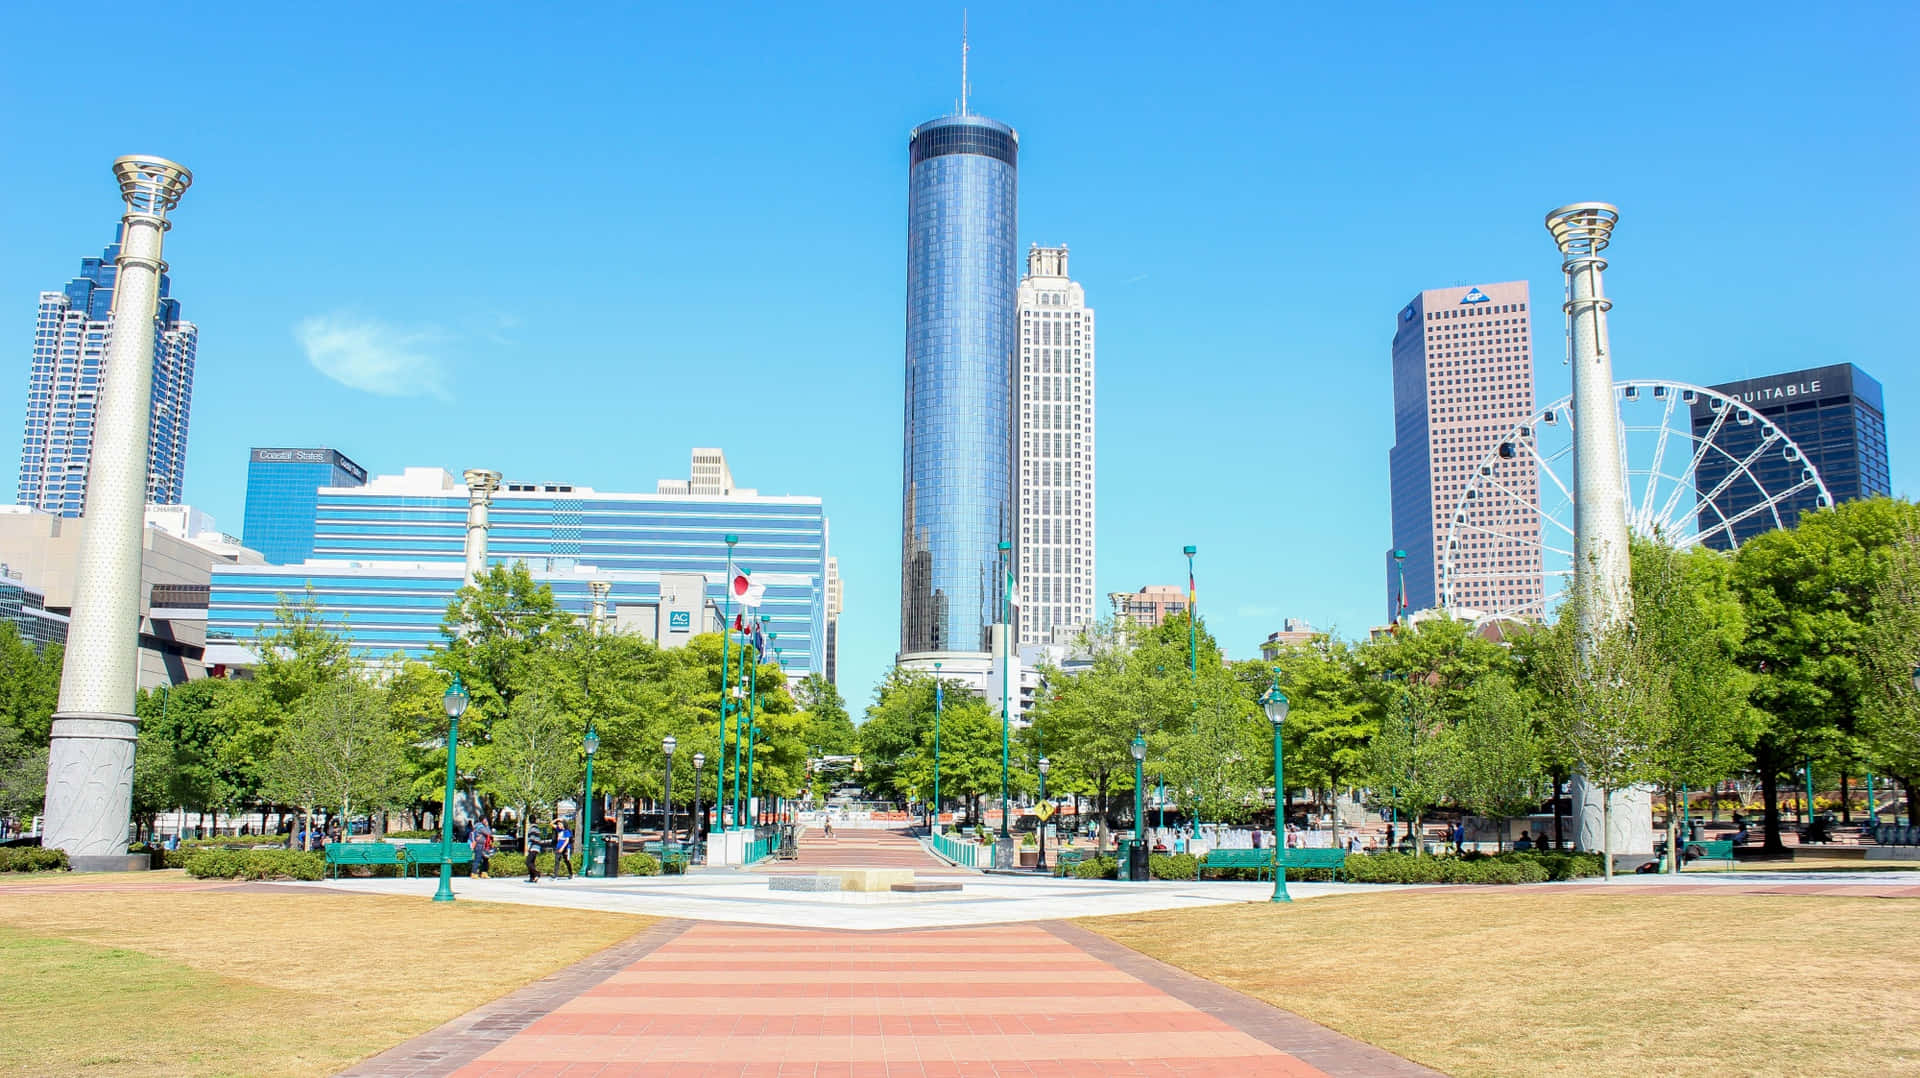 "The Bustling Cityscape of Atlanta, Georgia"